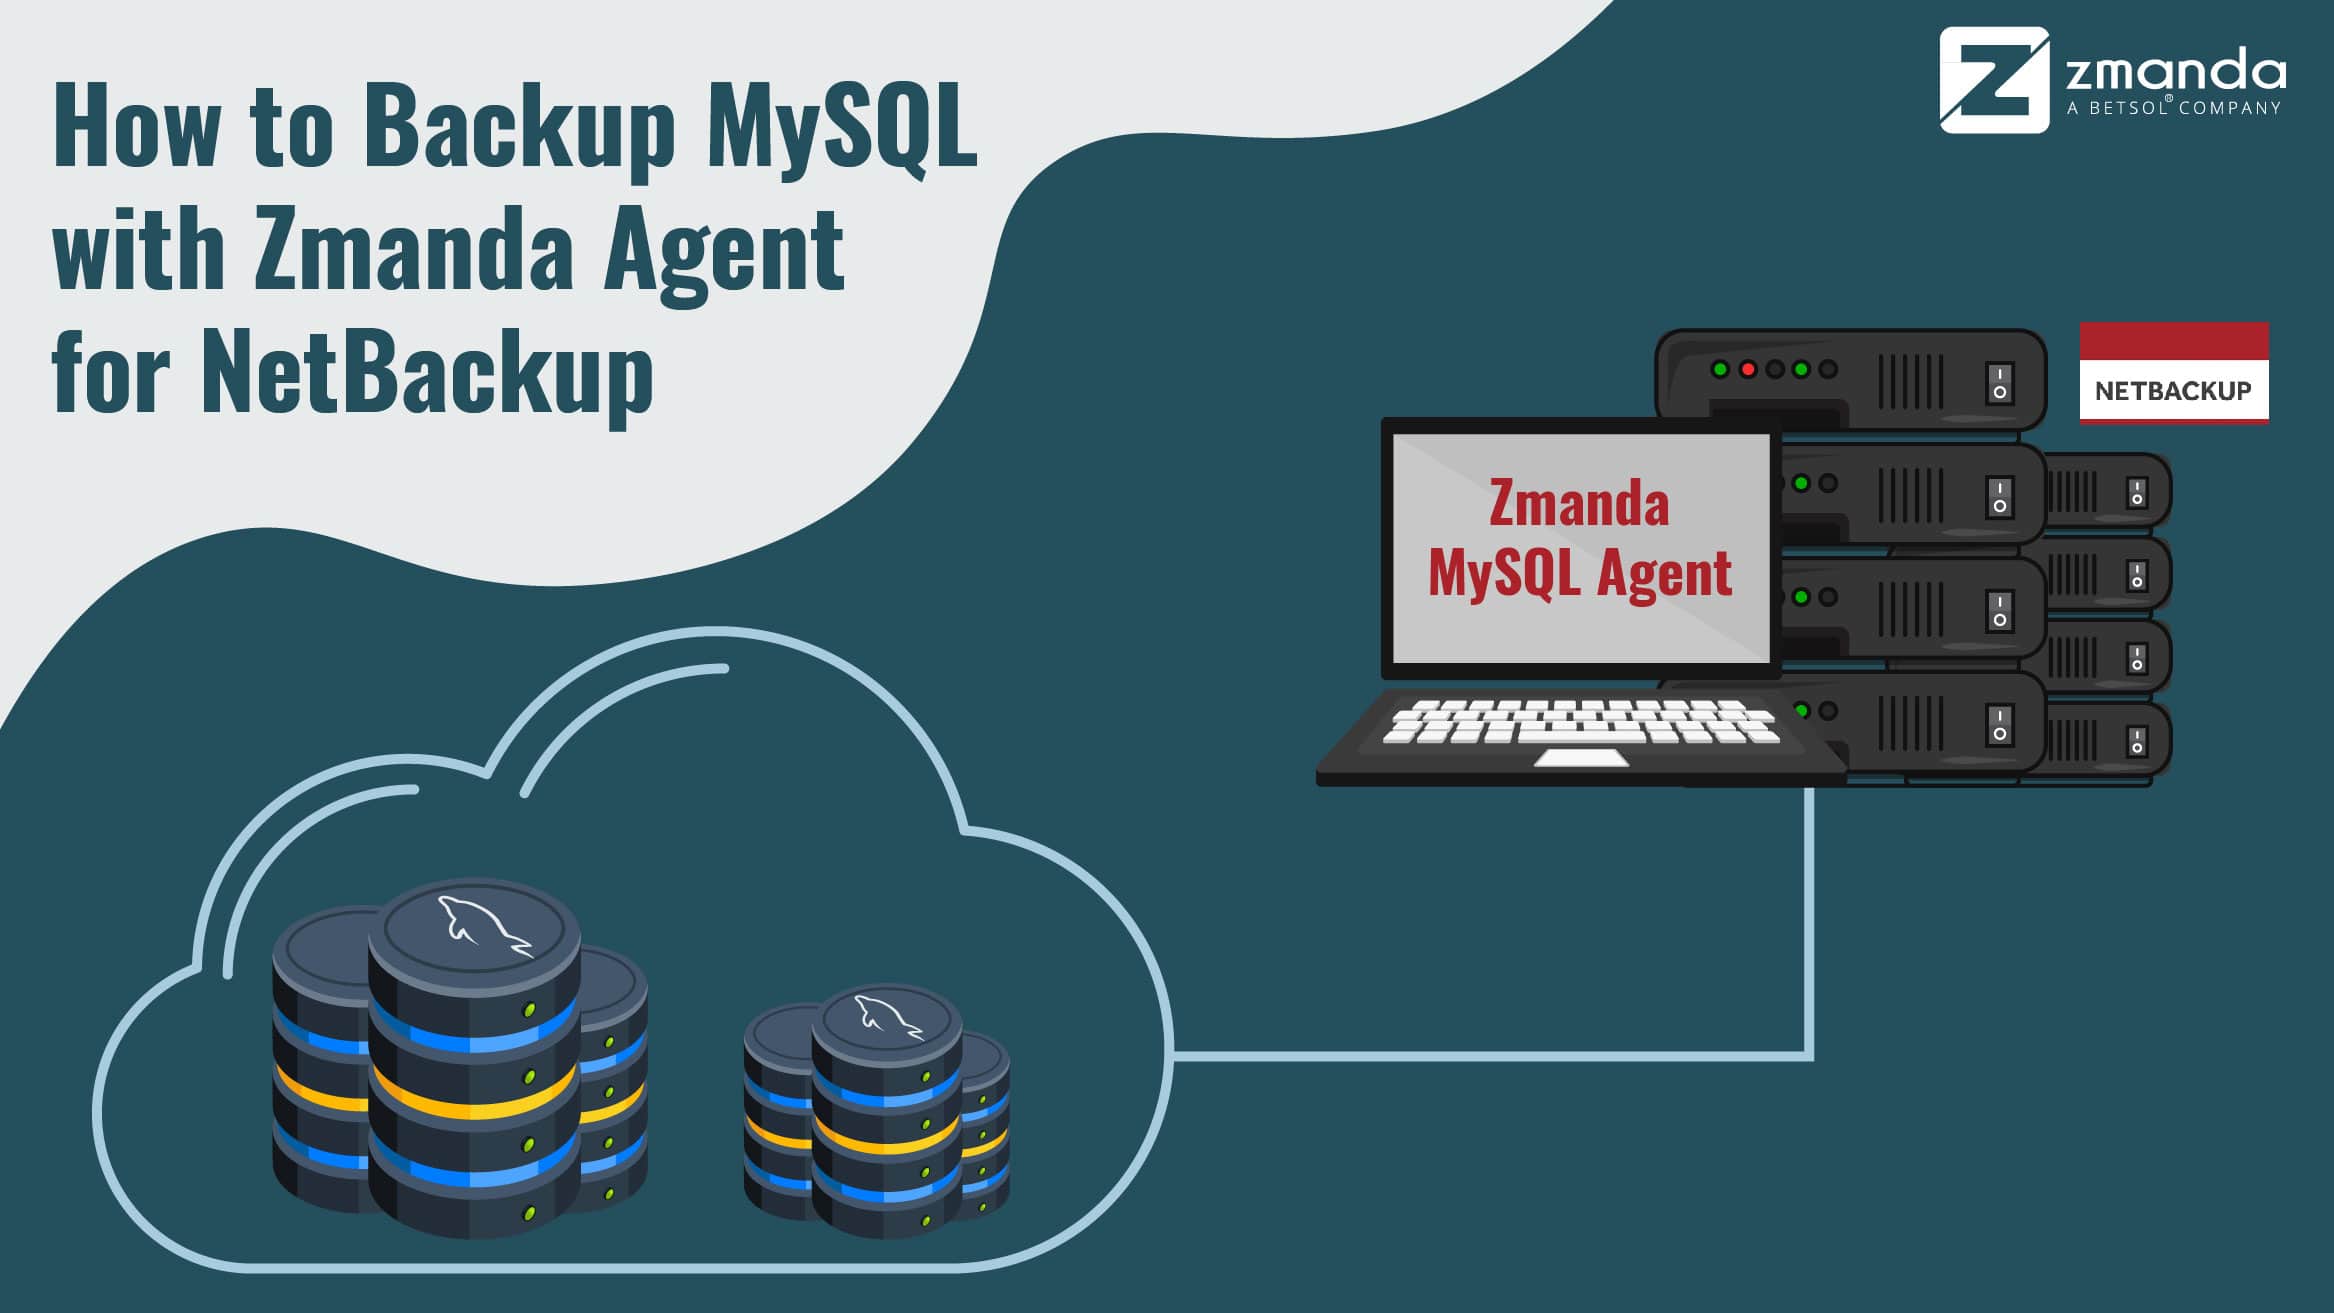 So sichern Sie MySQL mit Zmanda Agent for NetBackup